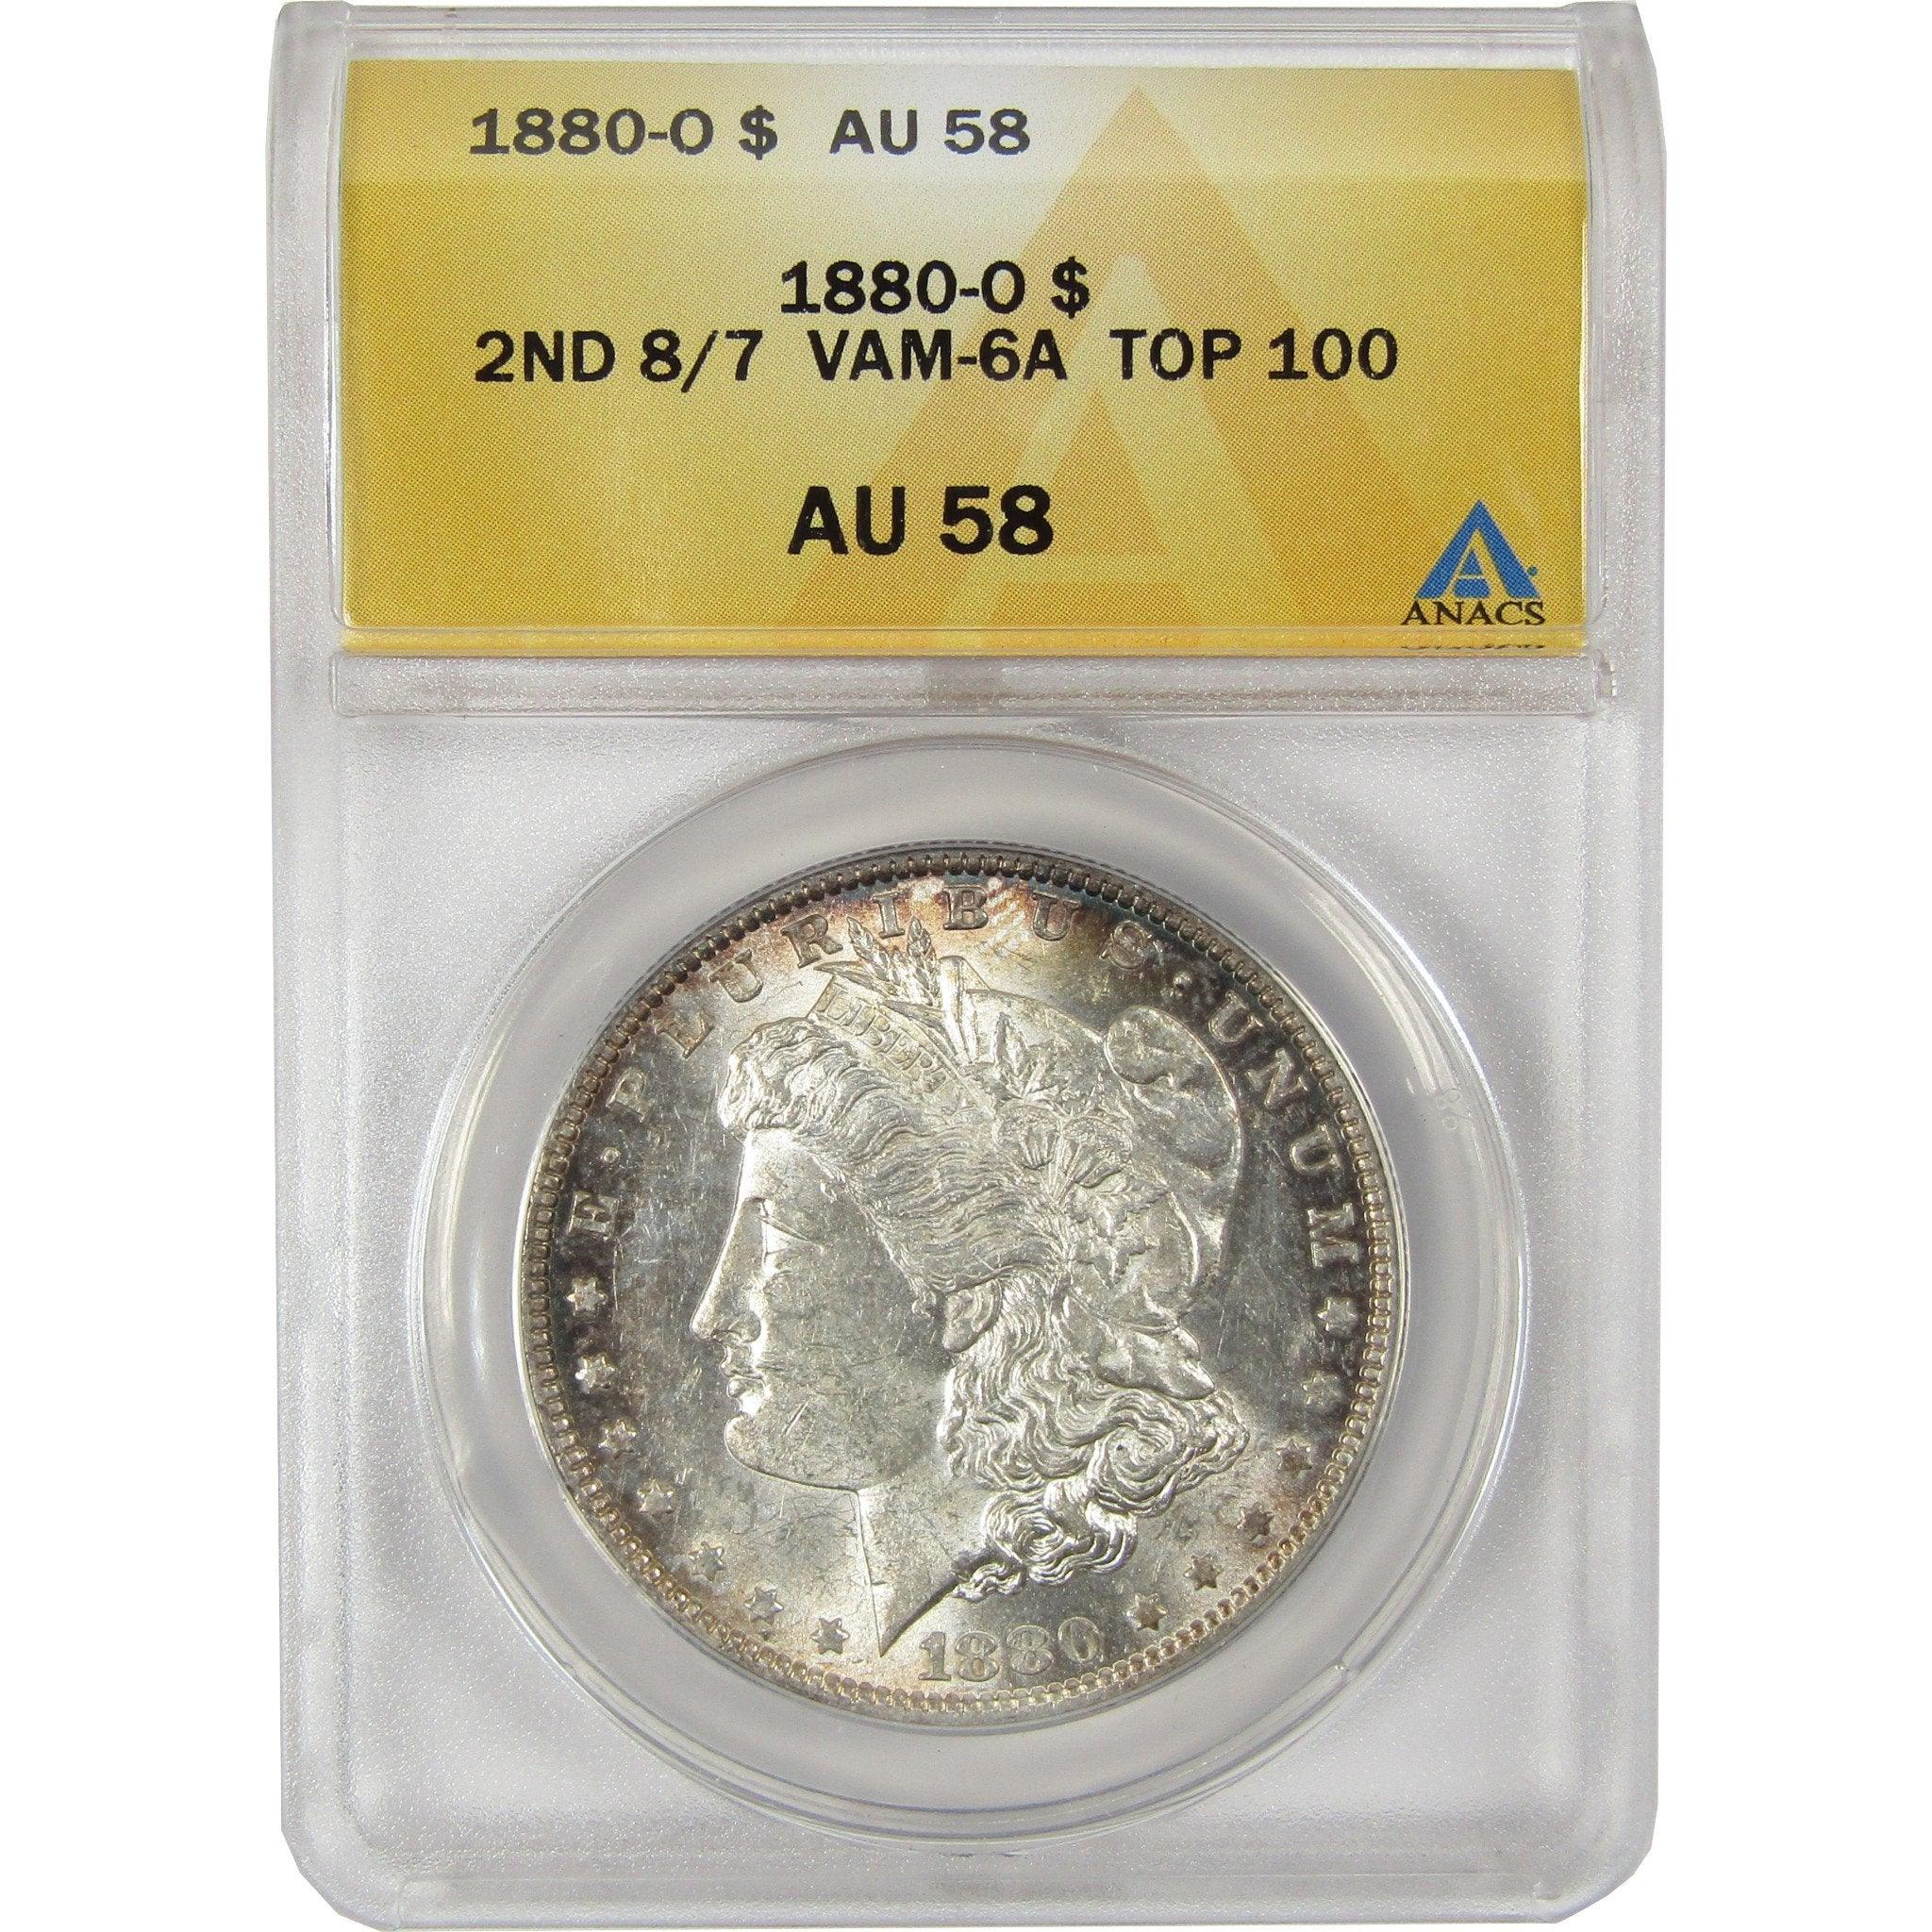 1880 O VAM 6A 2ND 8/7 Morgan Dollar AU 58 ANACS Silver SKU:CPC1132 - Morgan coin - Morgan silver dollar - Morgan silver dollar for sale - Profile Coins &amp; Collectibles